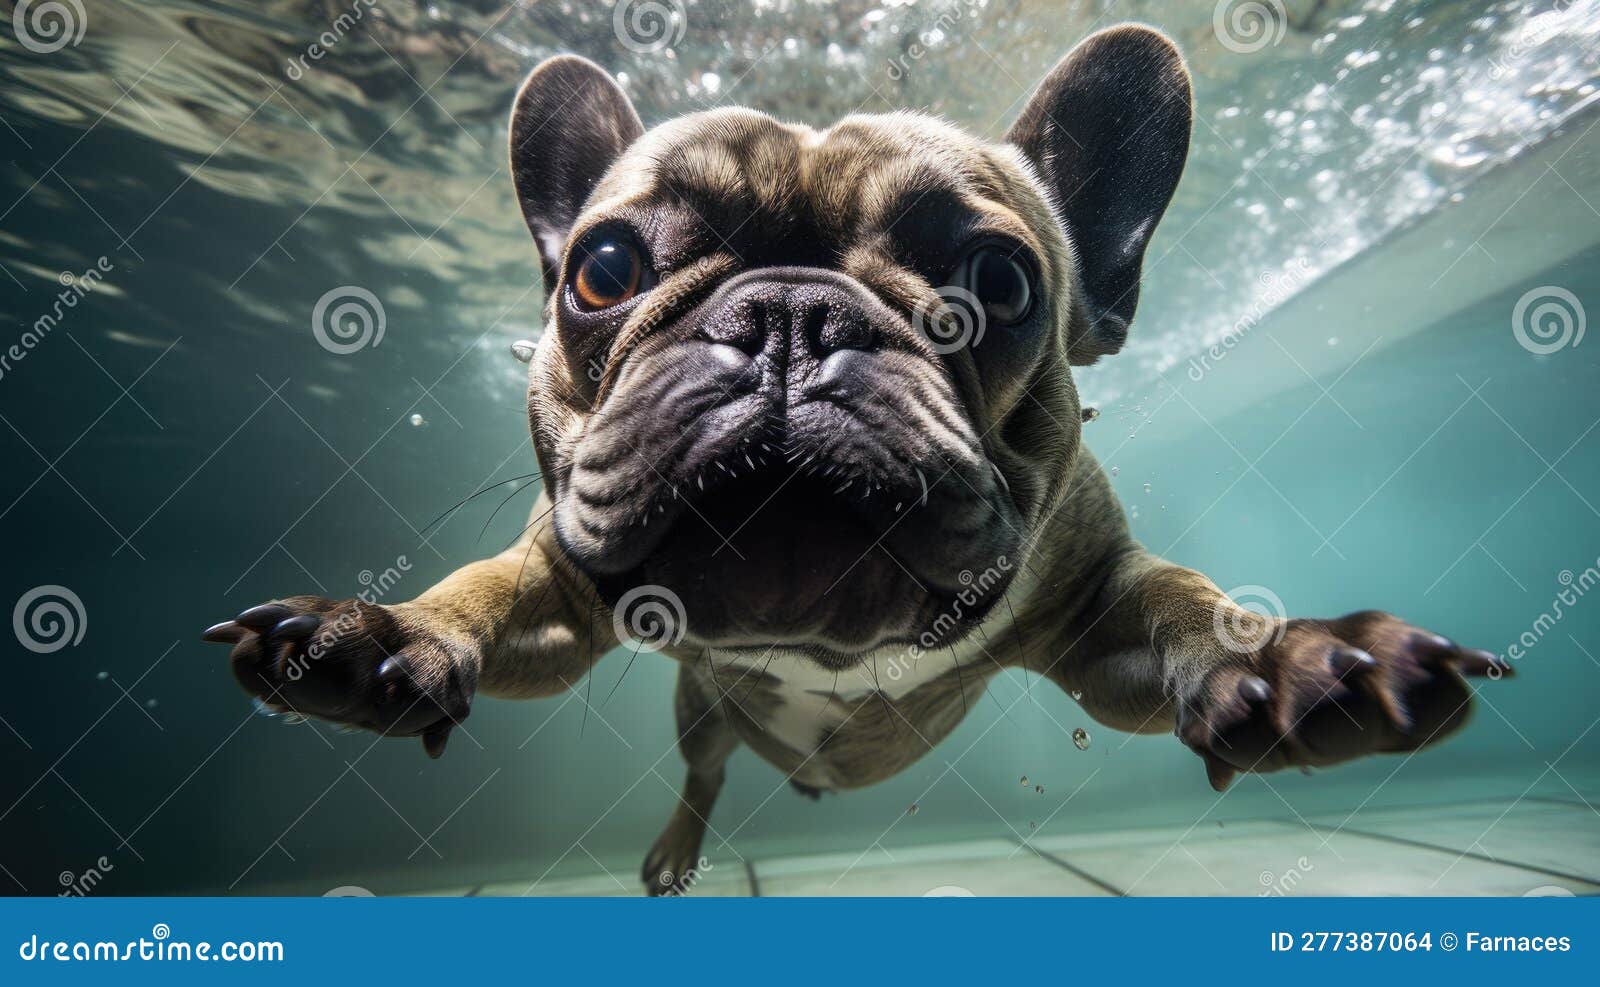 Animal under water stock illustration. Illustration of puppy - 277387064